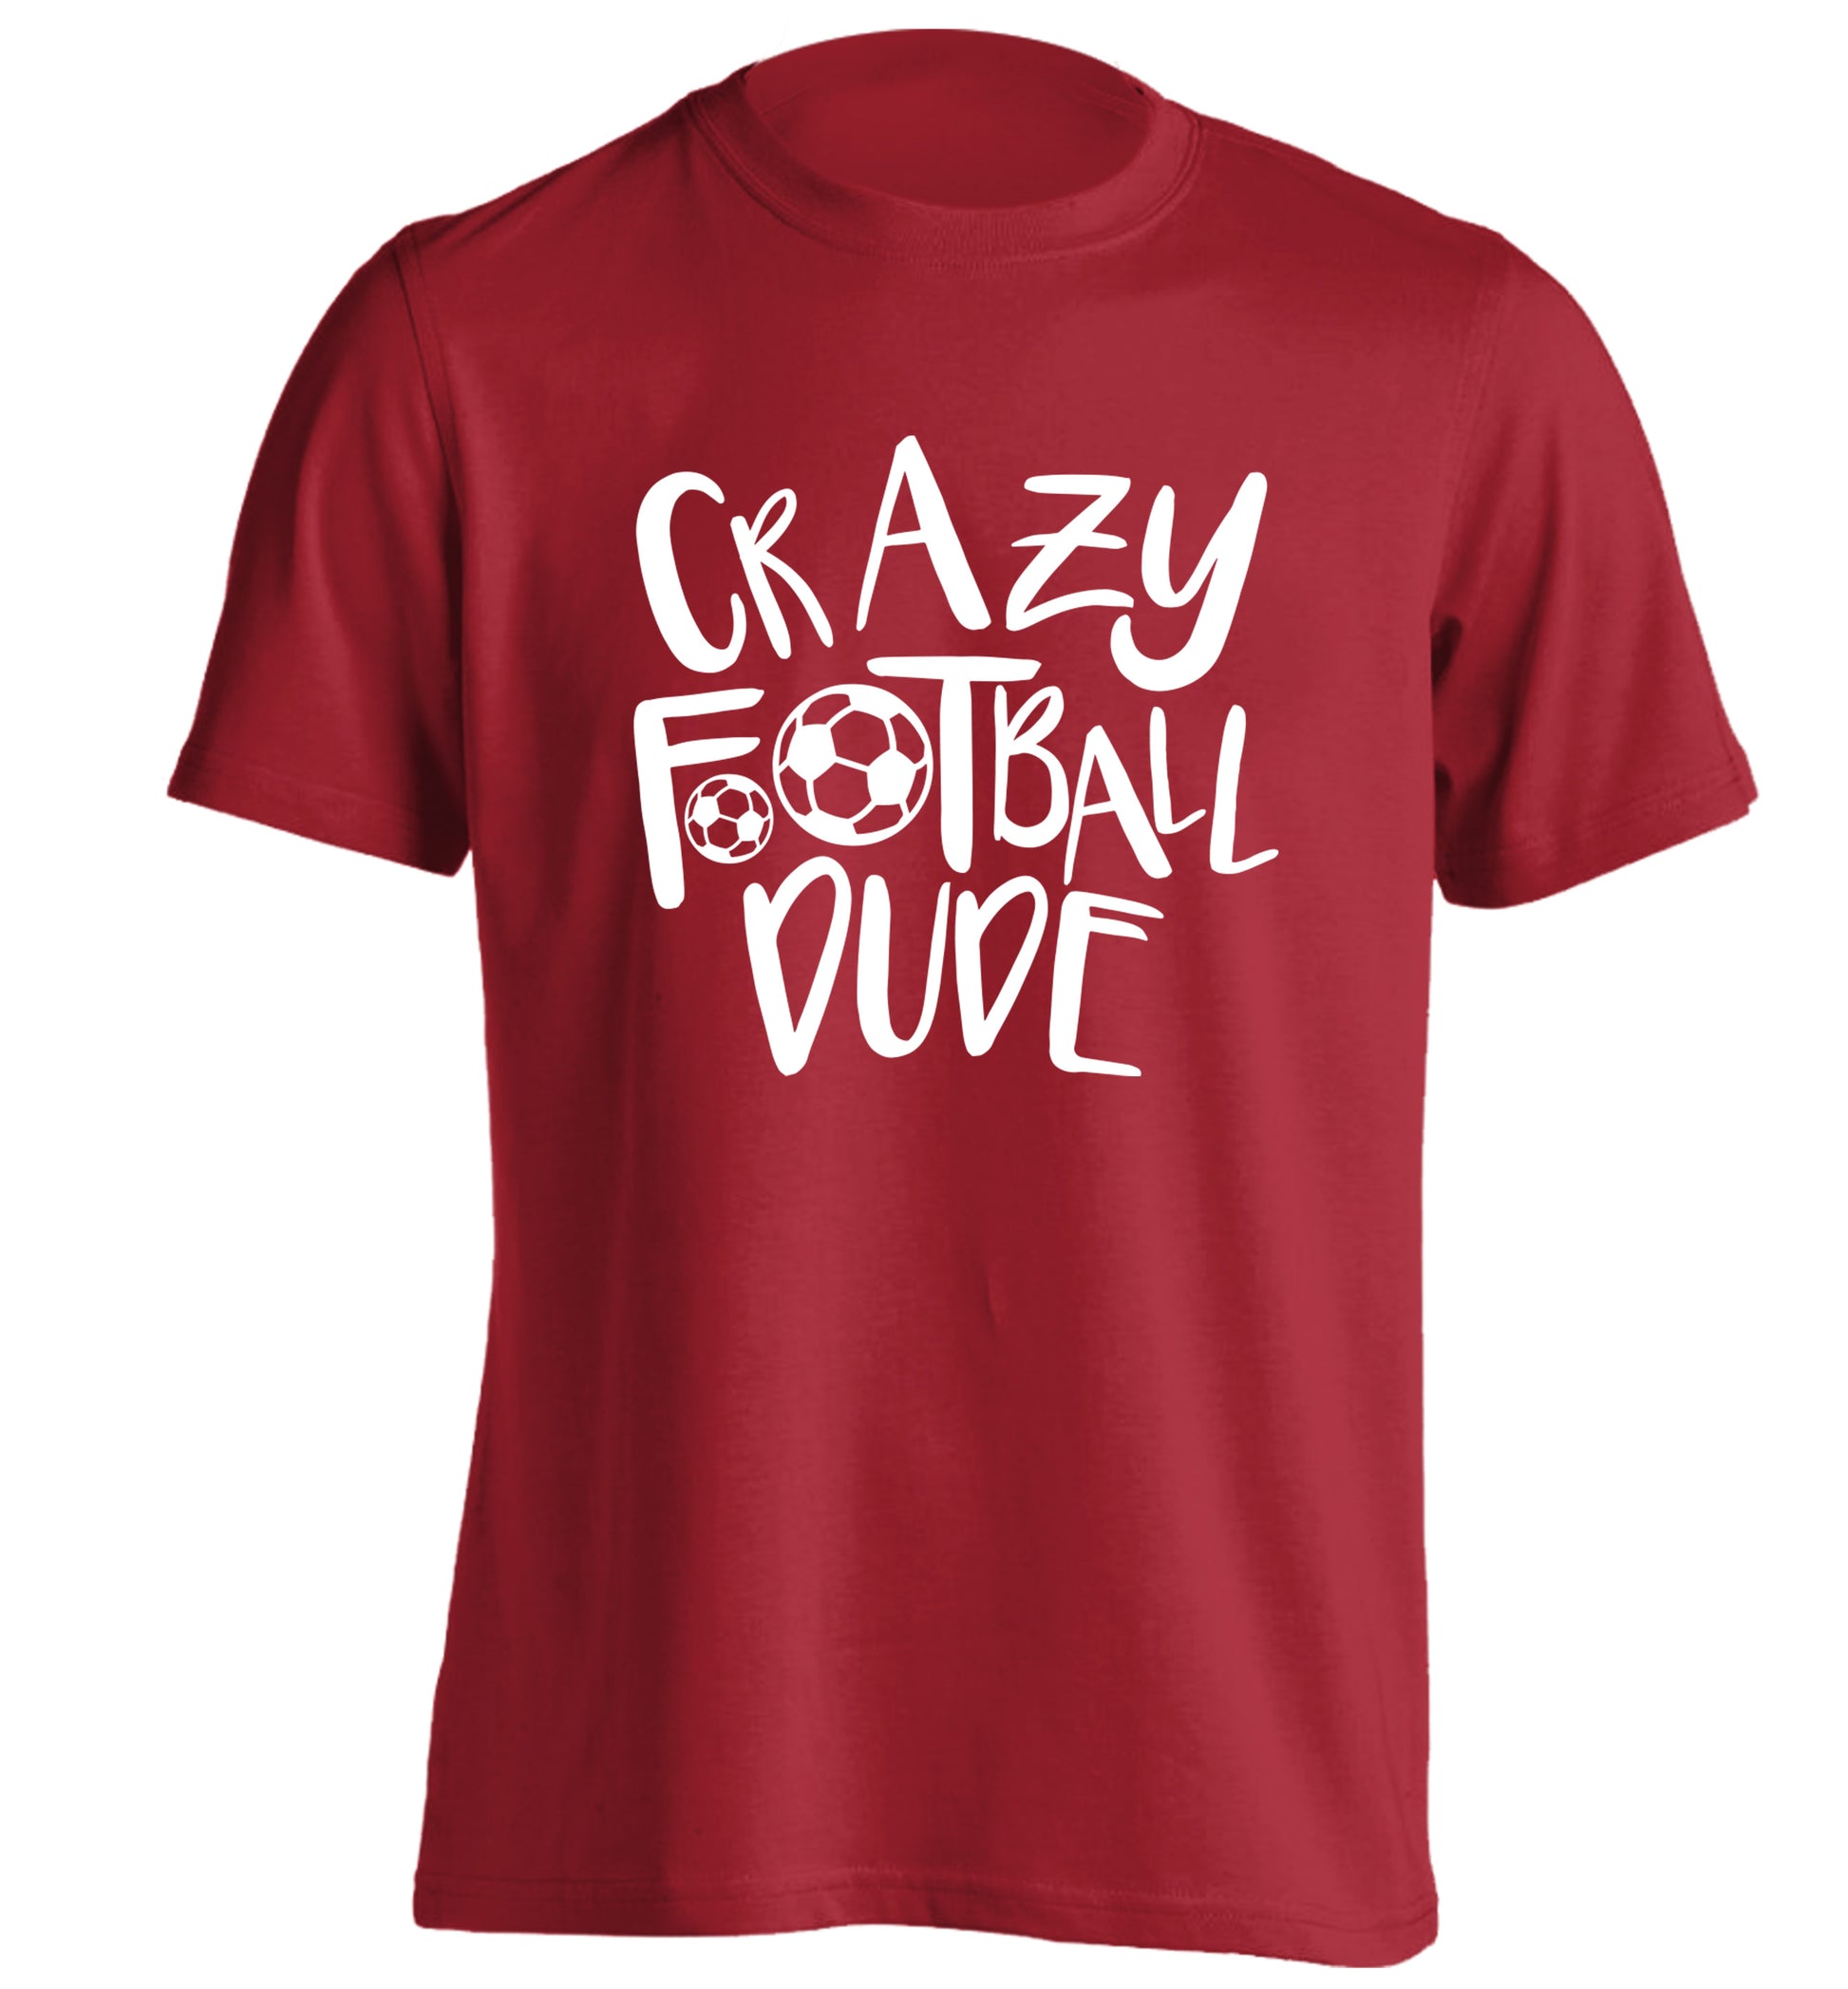 Crazy football dude adults unisexred Tshirt 2XL